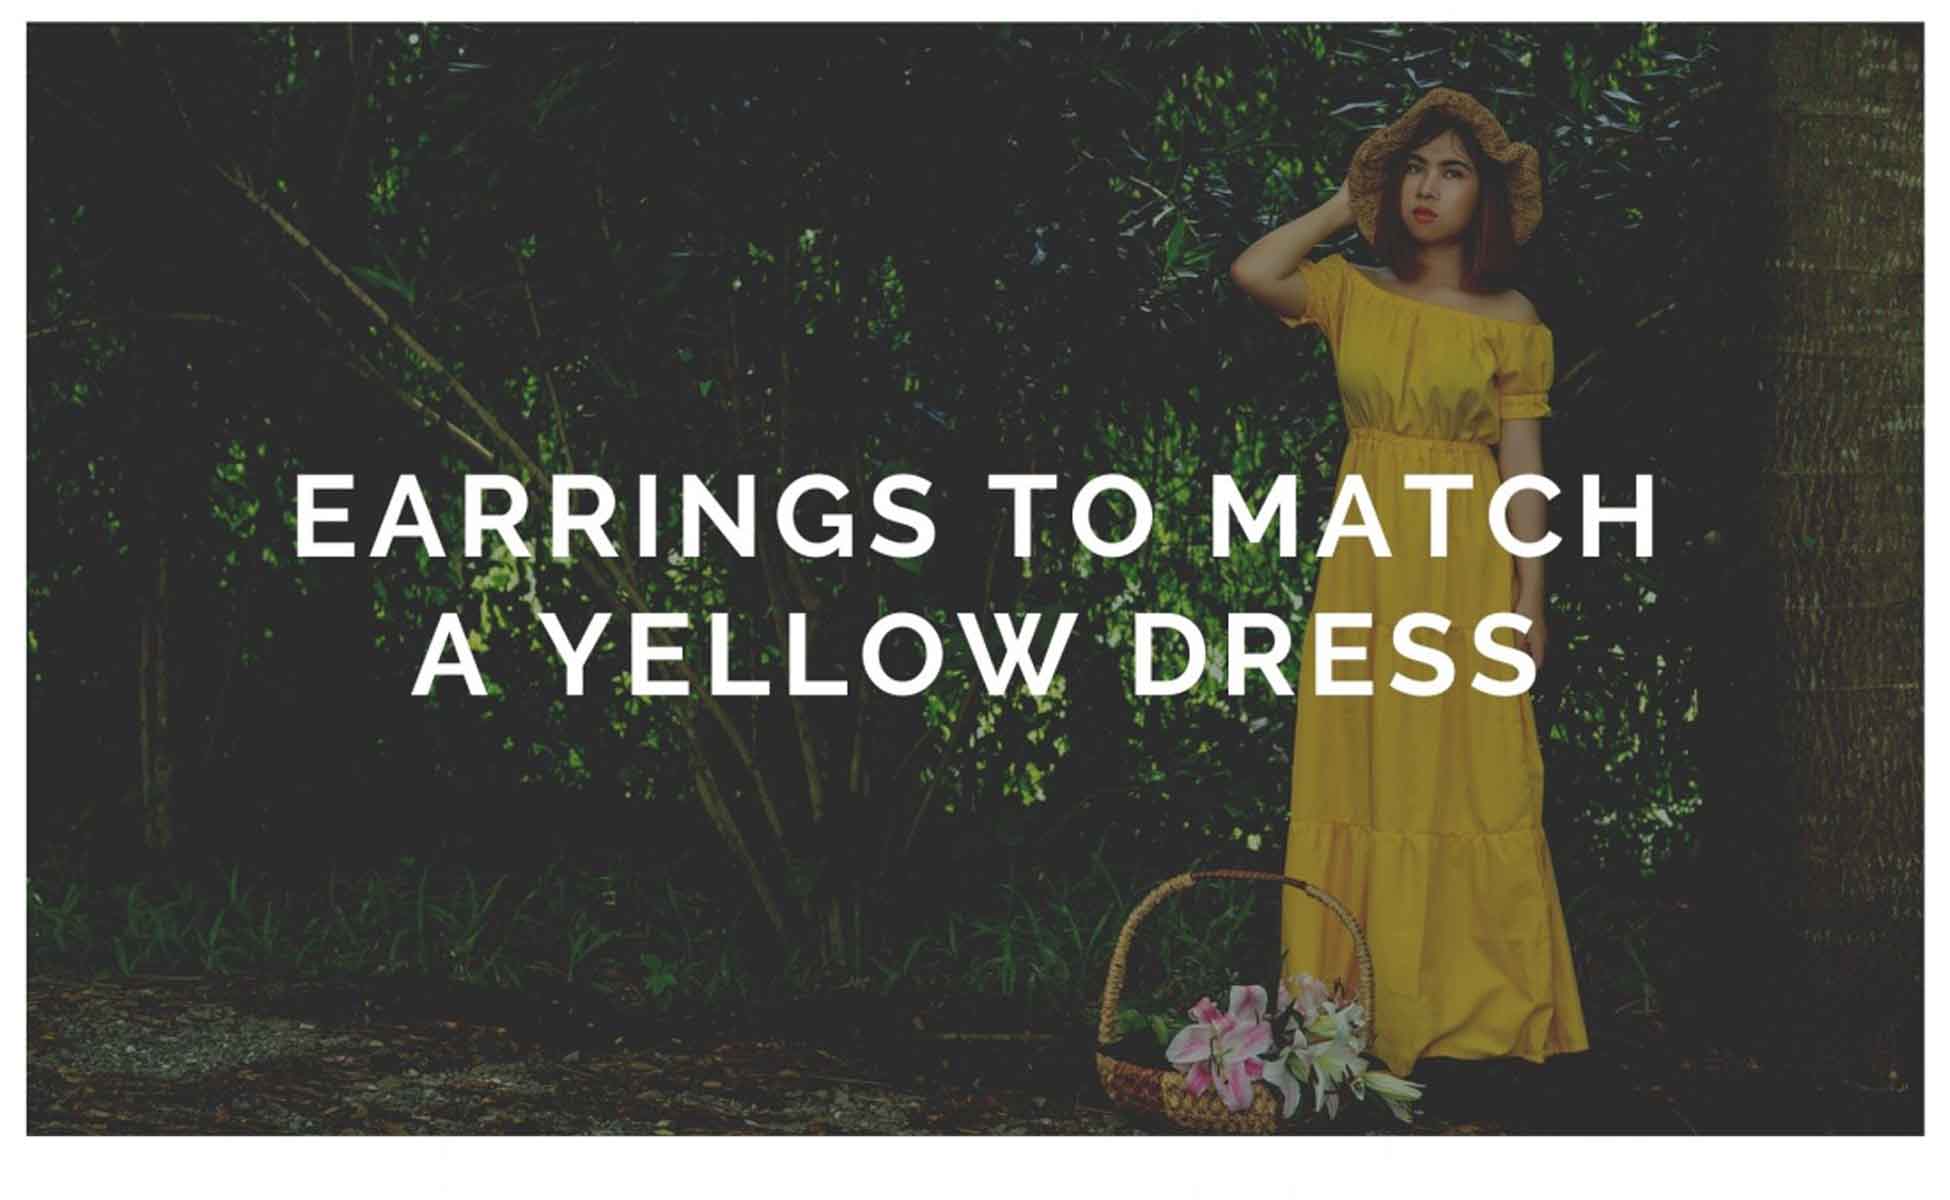 Earrings for a Yellow Dress